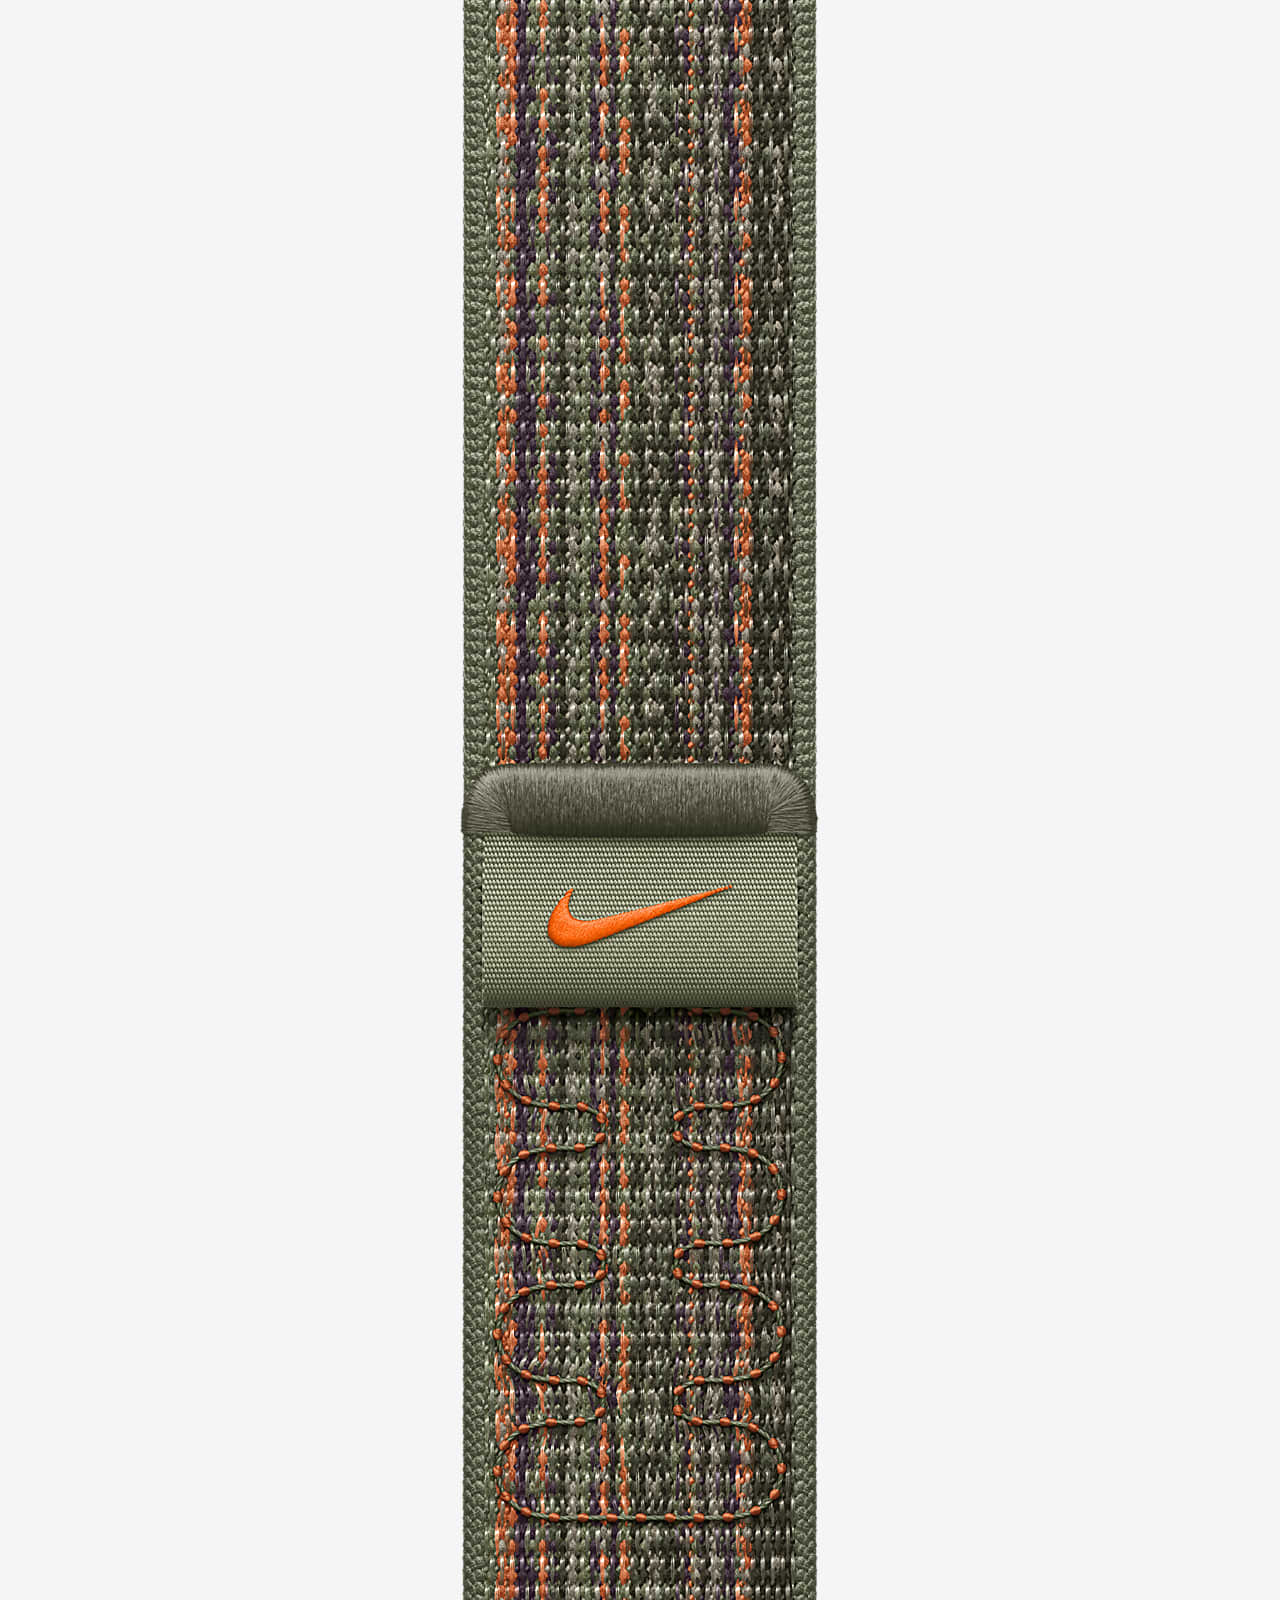 Correa loop deportiva Nike Secuoya/Naranja de 41 mm